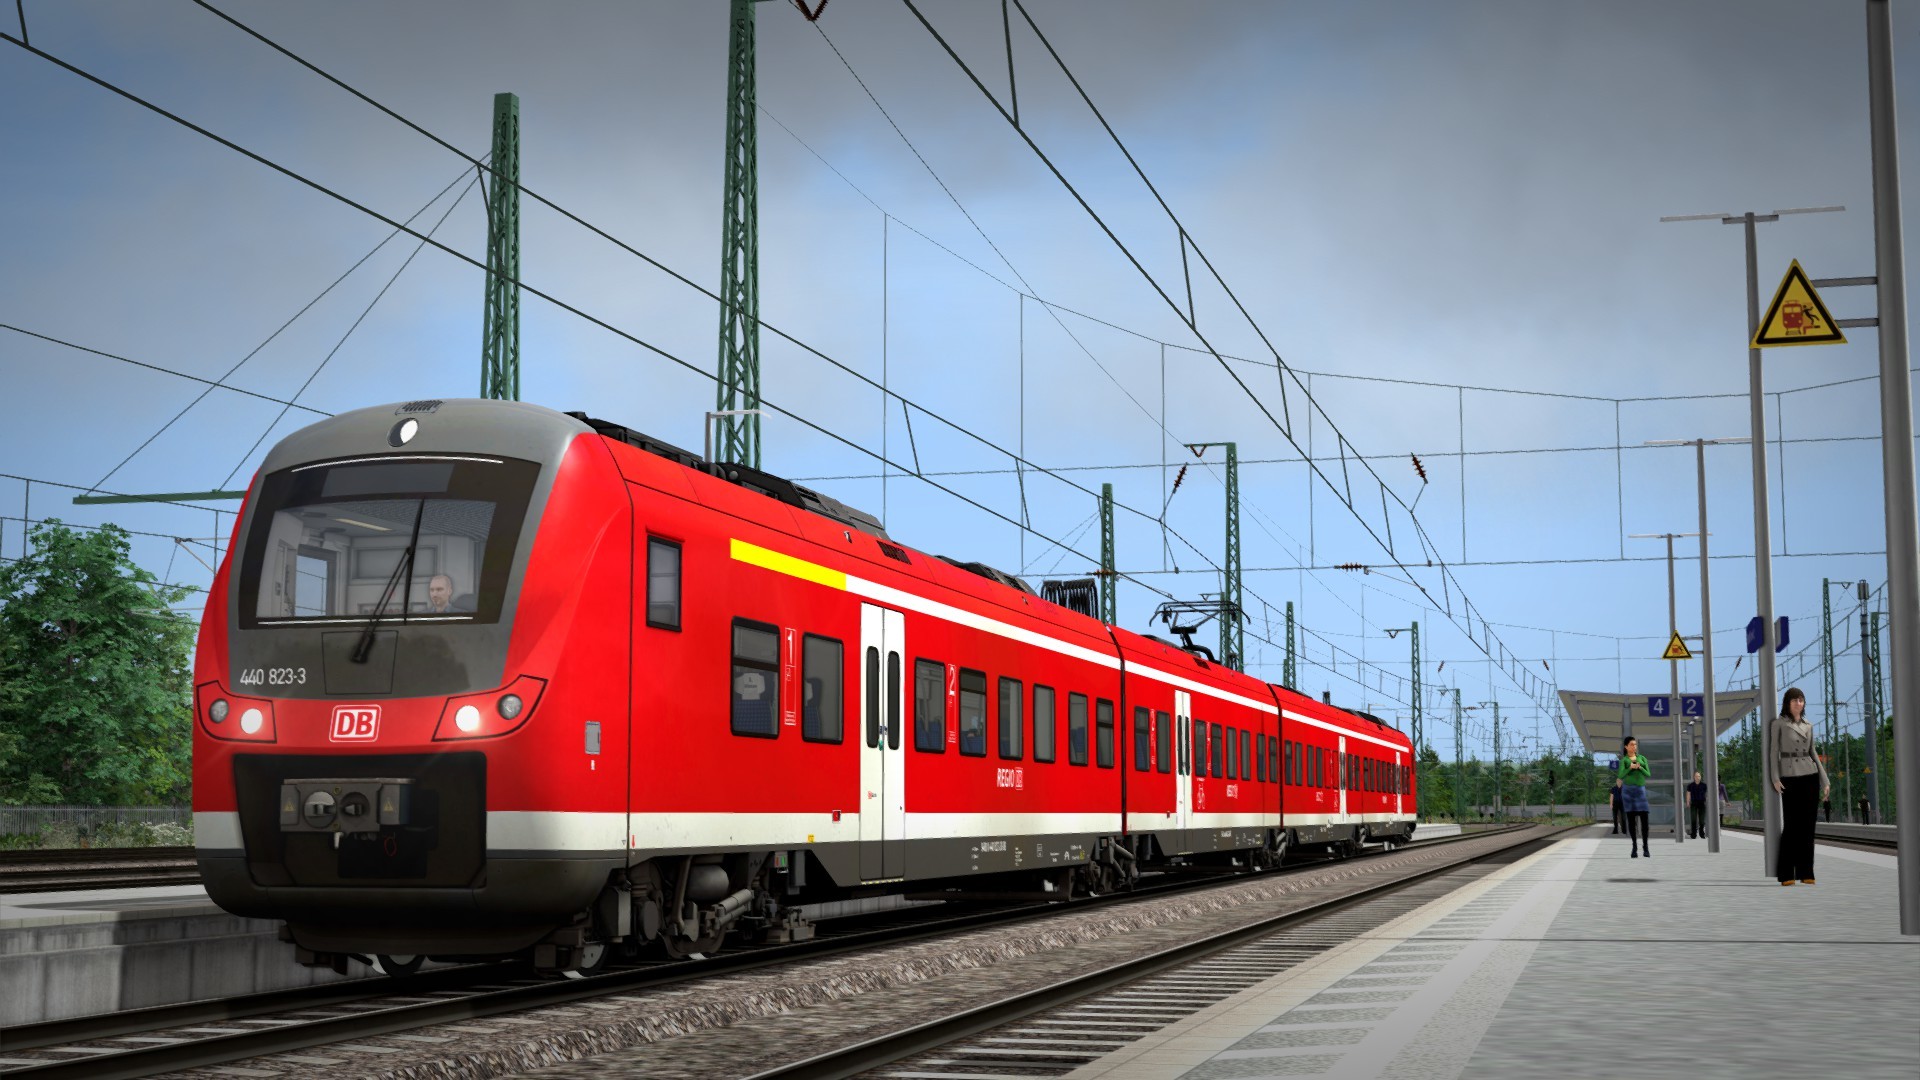 Train Simulator 2020 On Steam